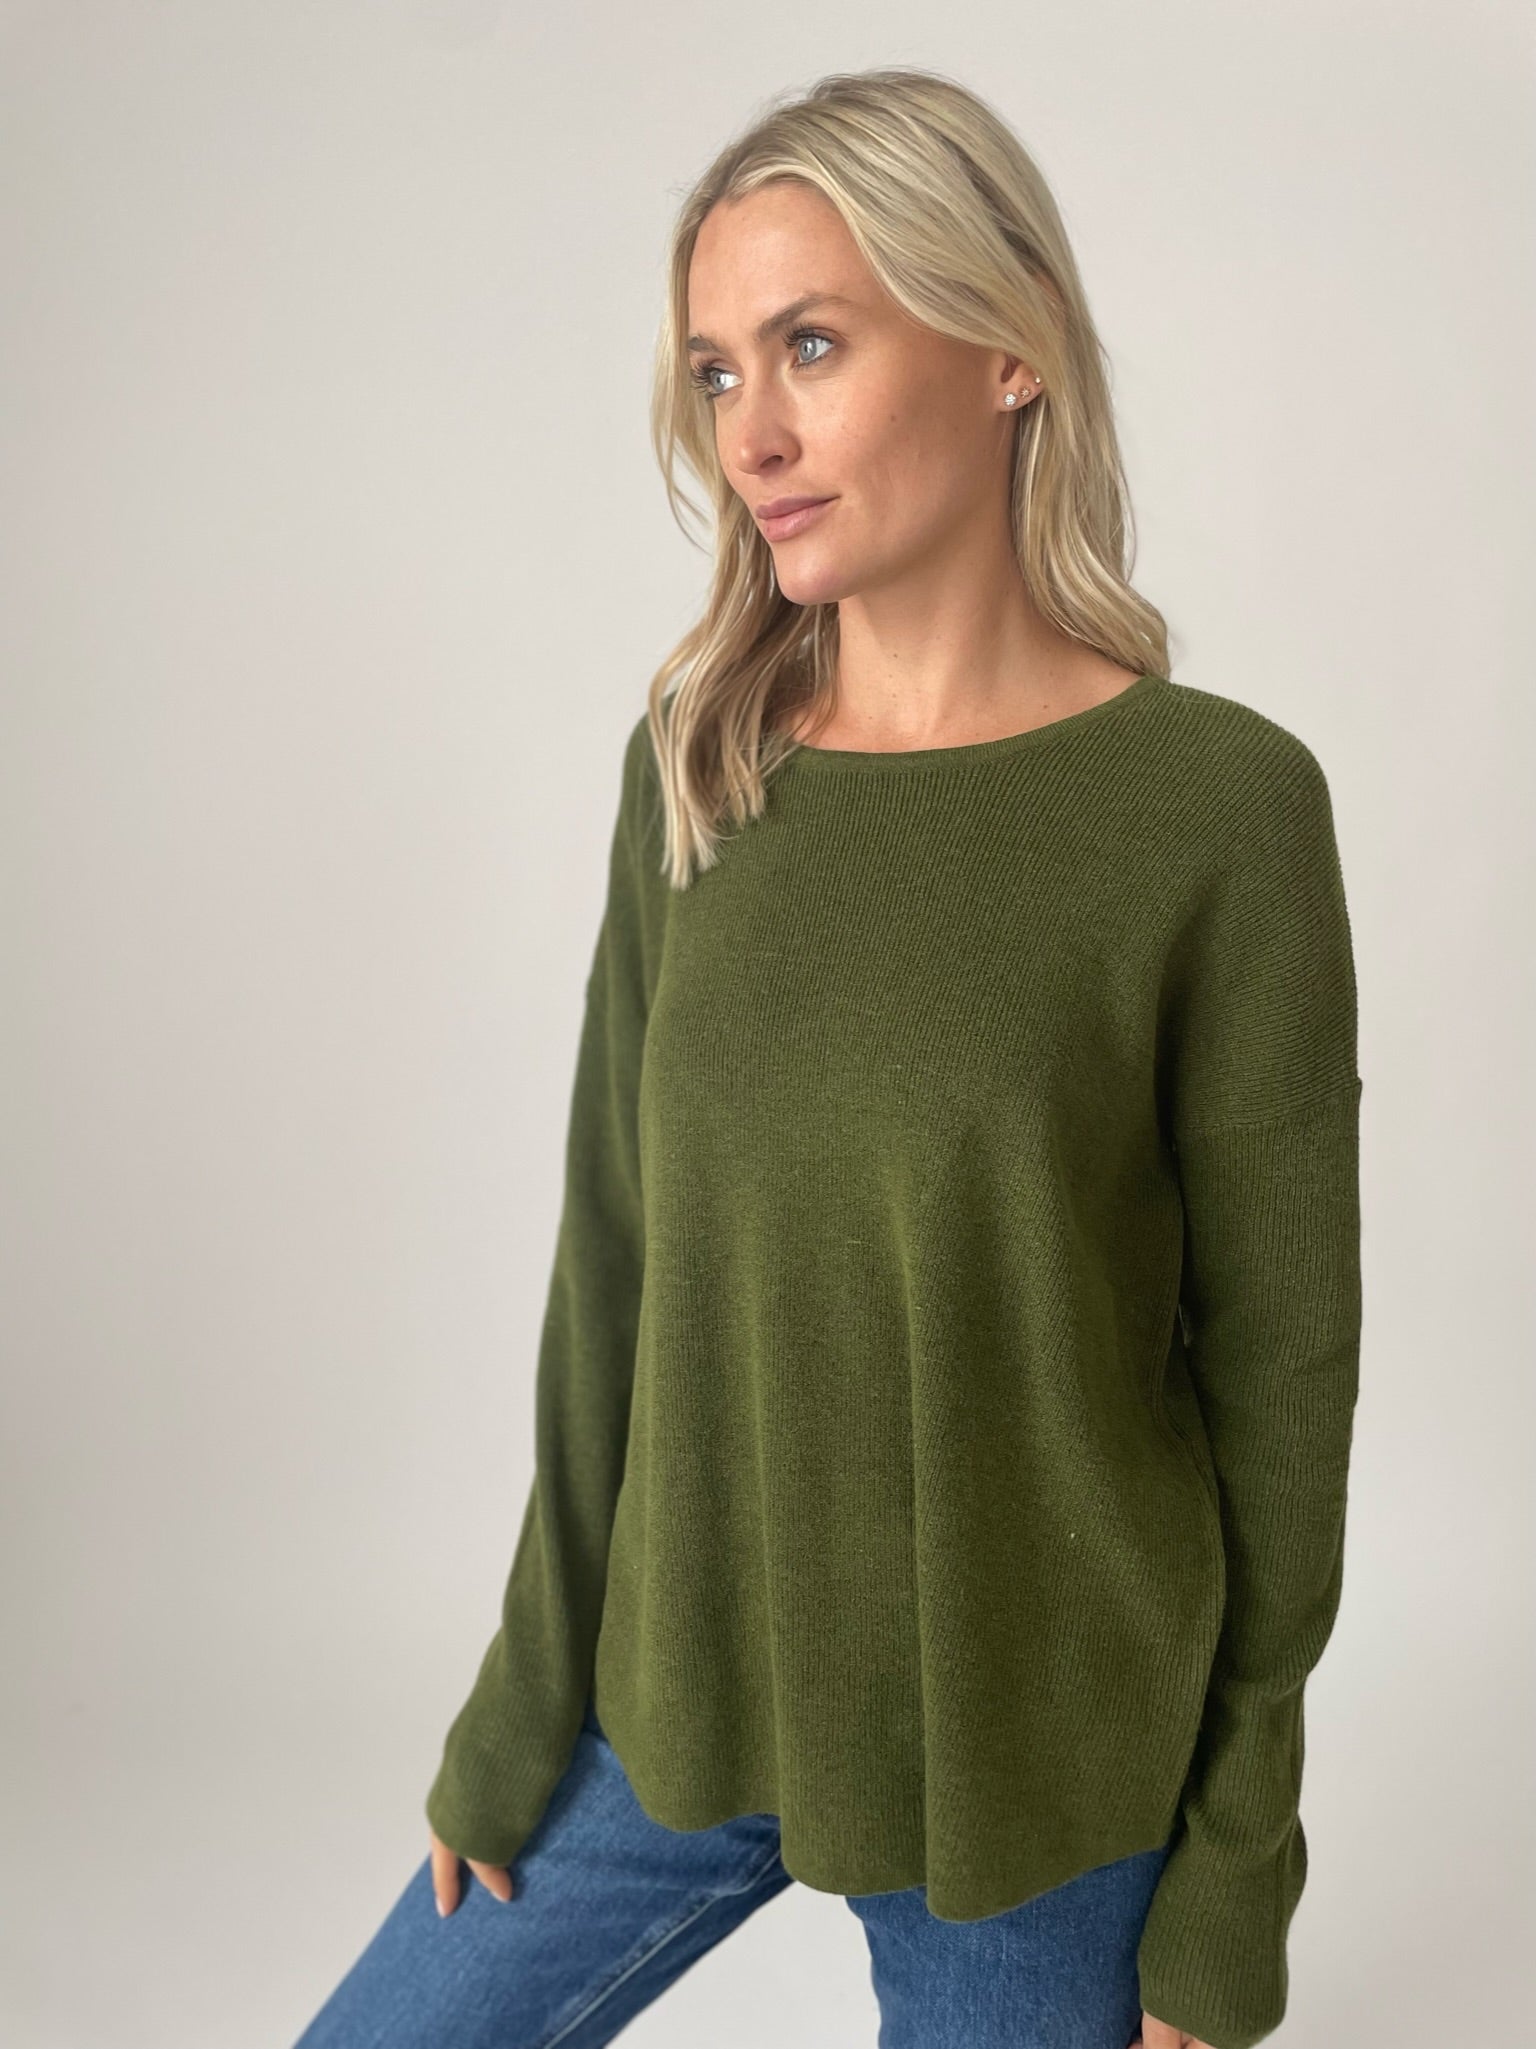 ryan sweater [olive]